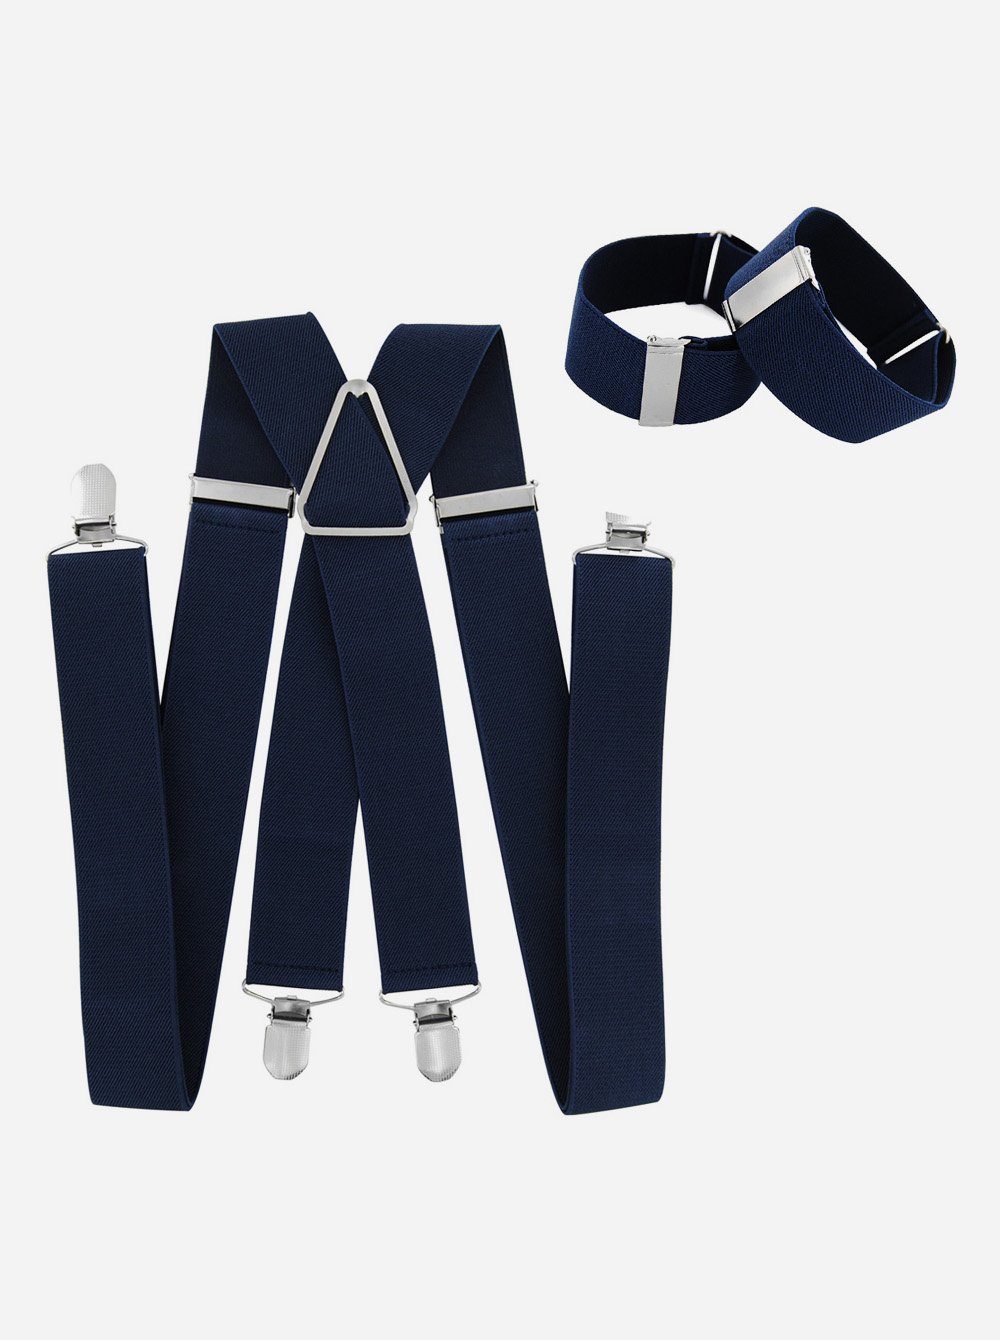 axy Hosenträger (Herren Hosenträger mit 1 Paar Ärmelhalter Set) 3,5cm Breit  verstellbar und elastisch Hemd Ärmelband